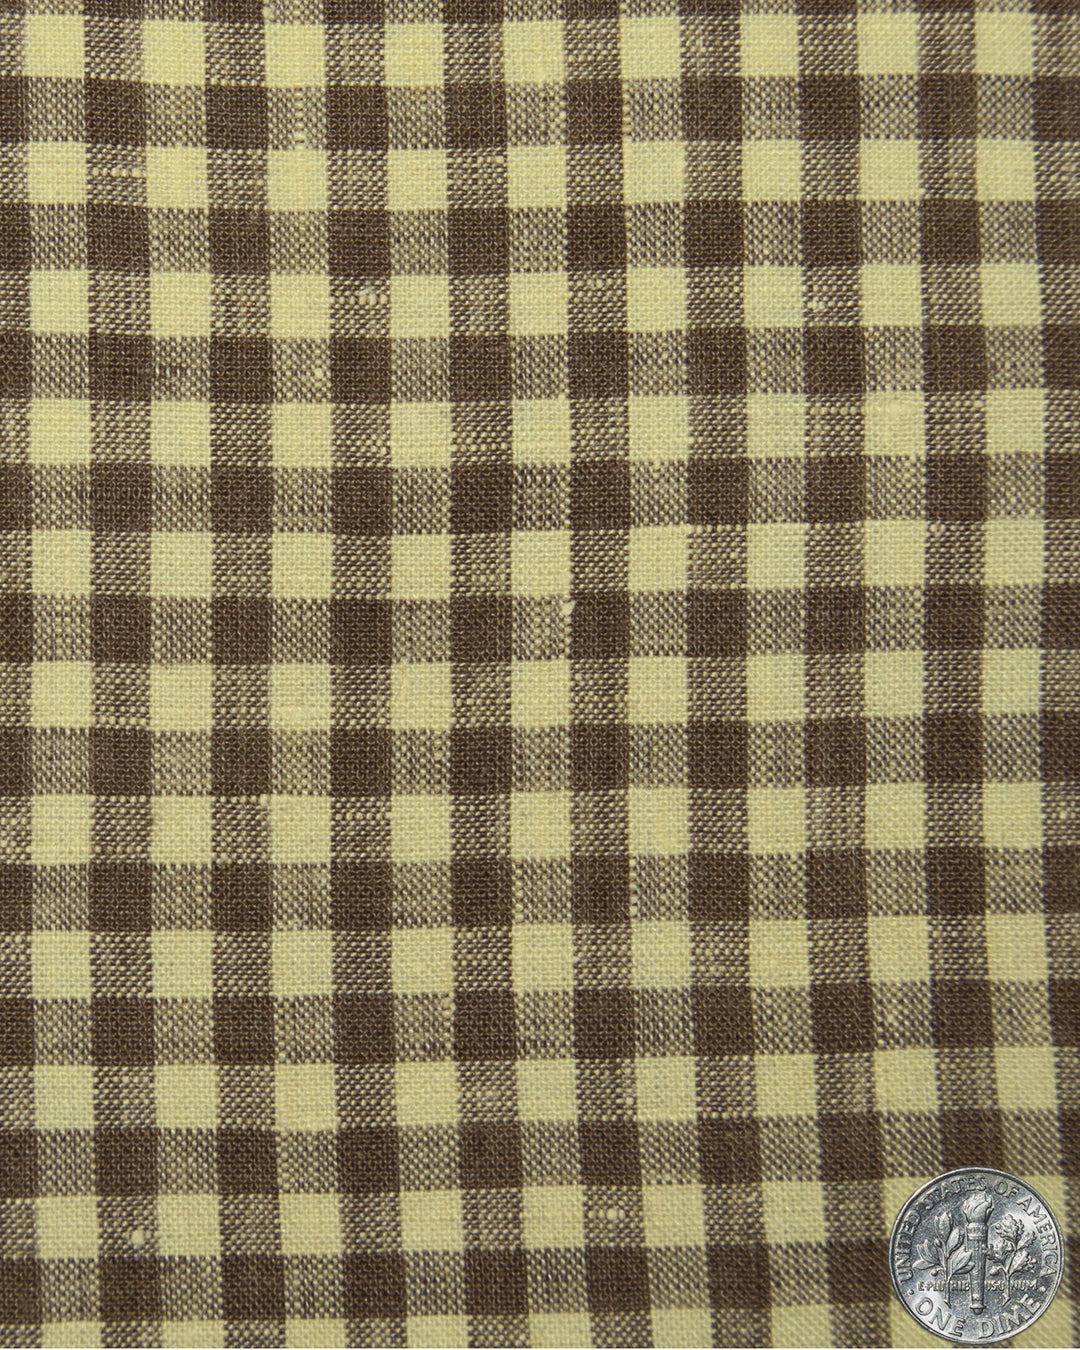 Linen:Yellow Brown Gingham Checks Shirt